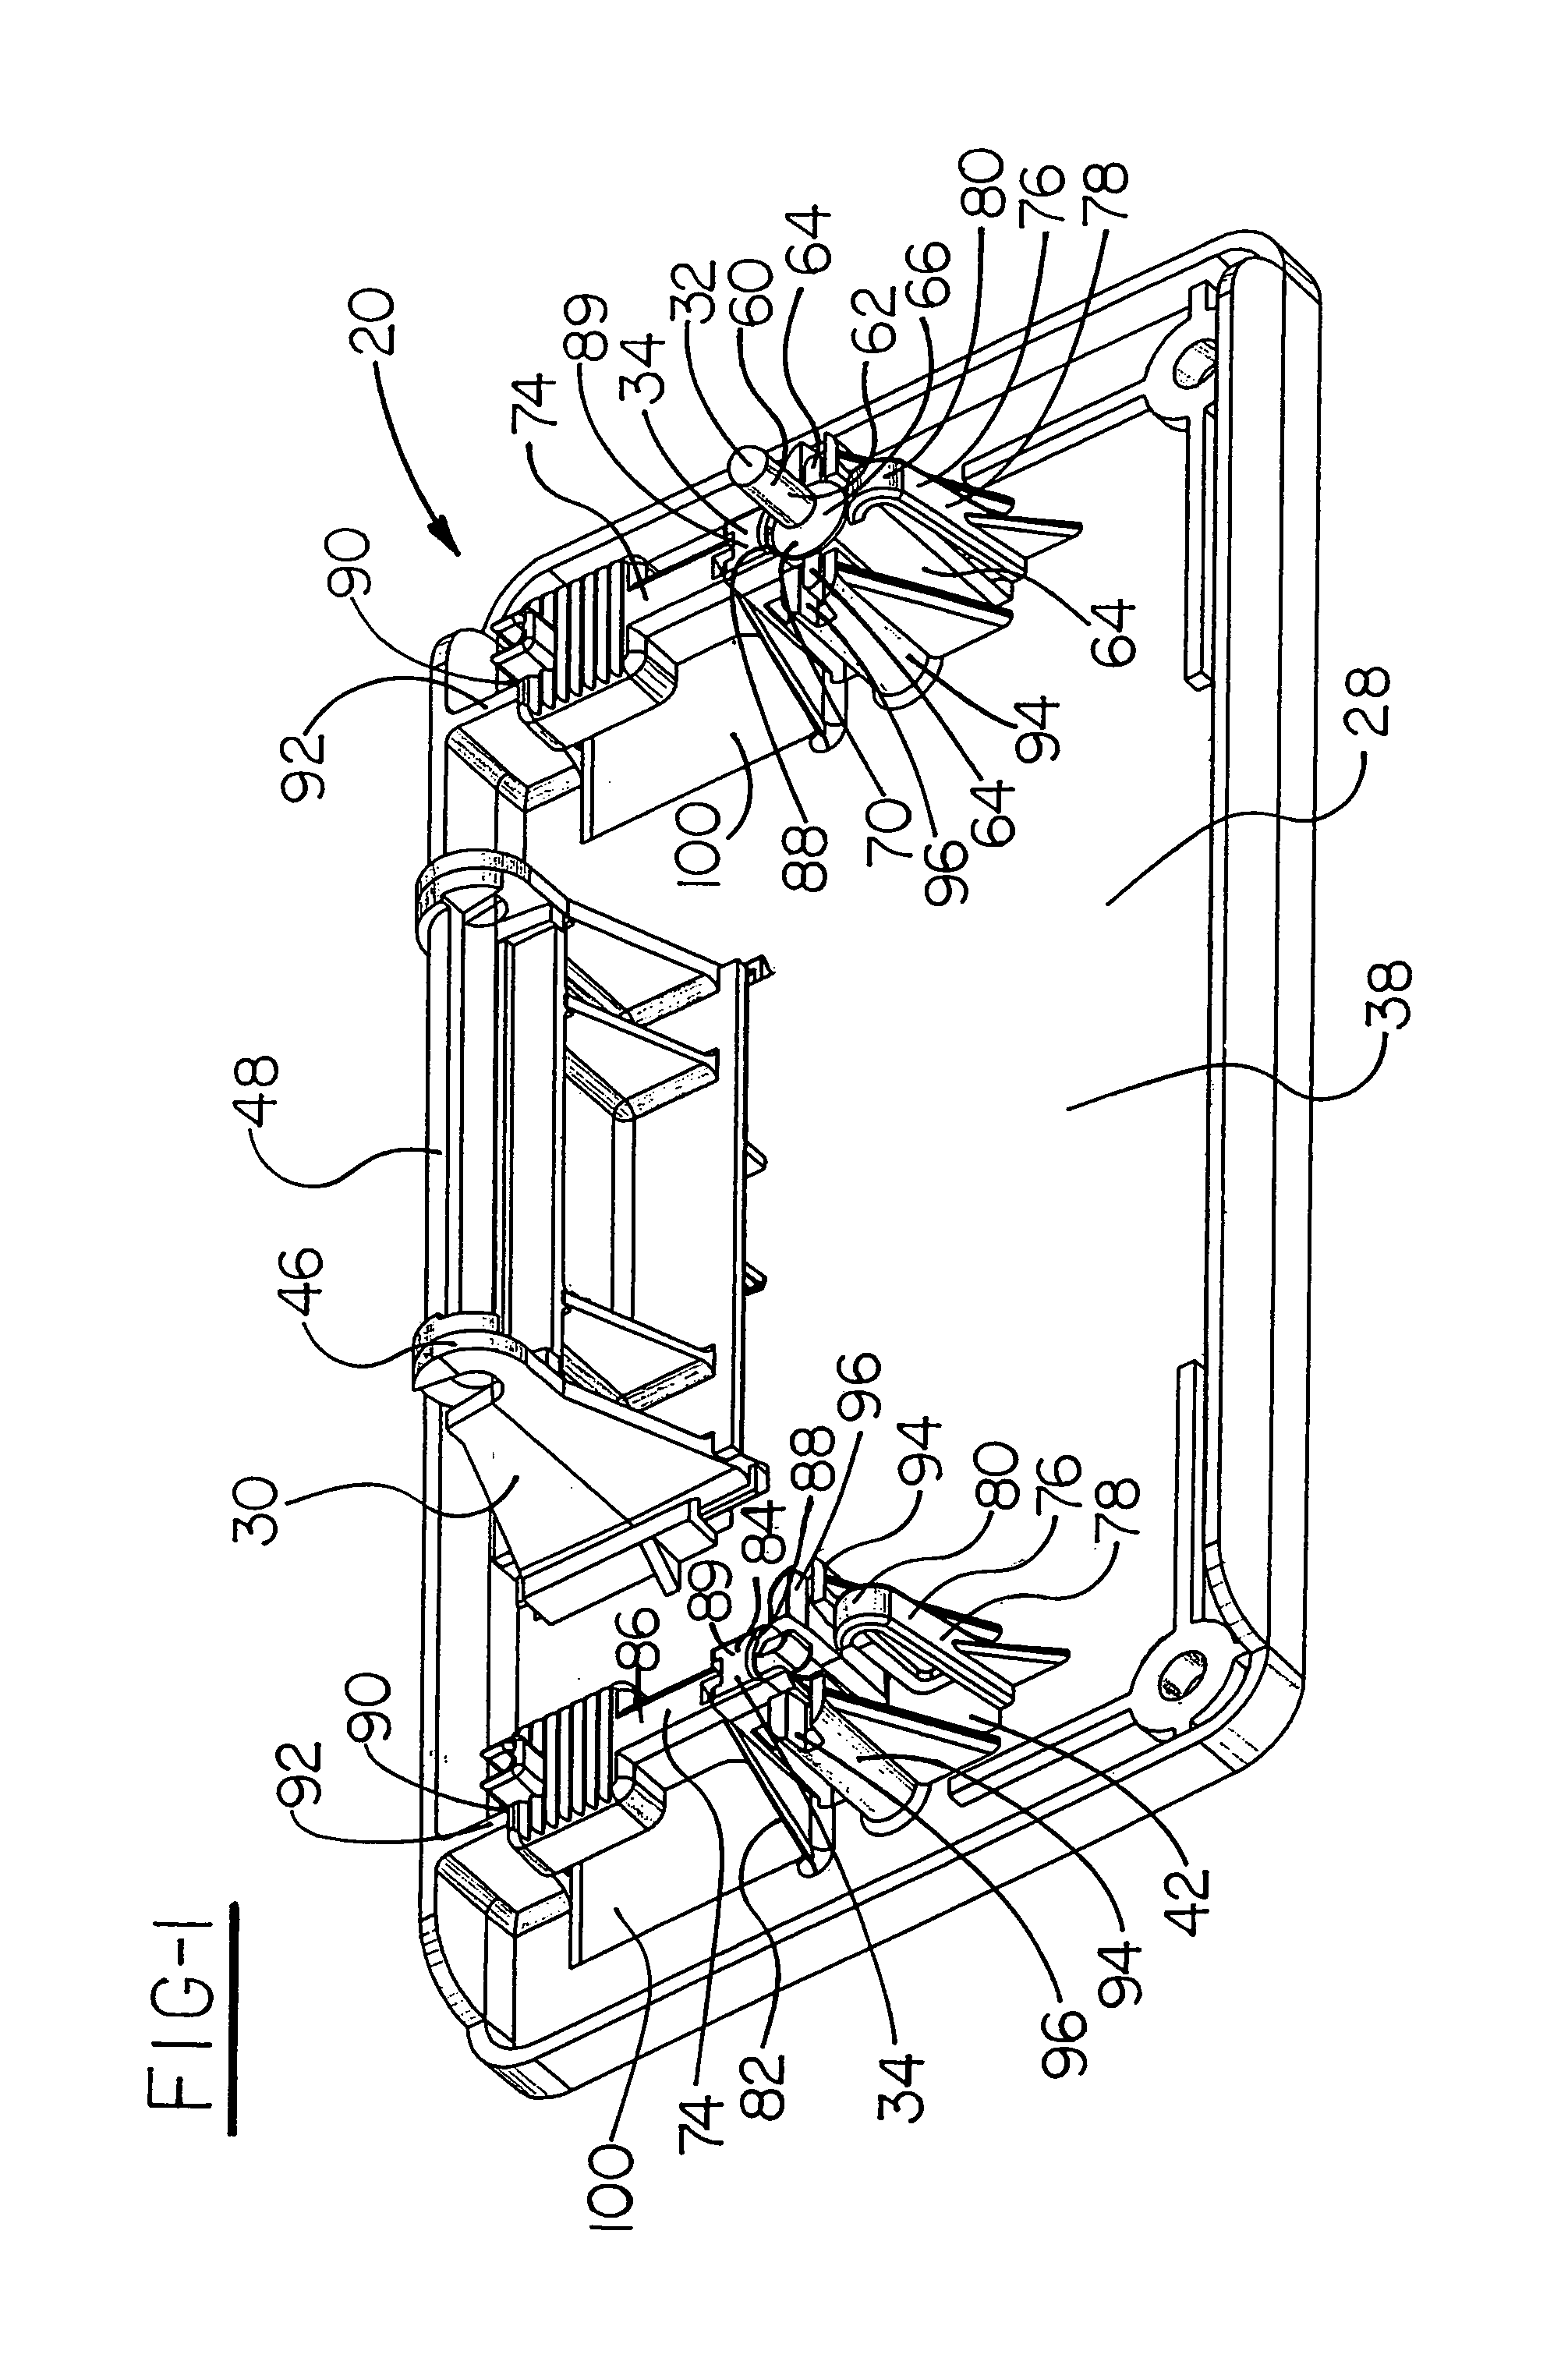 Mounting apparatus